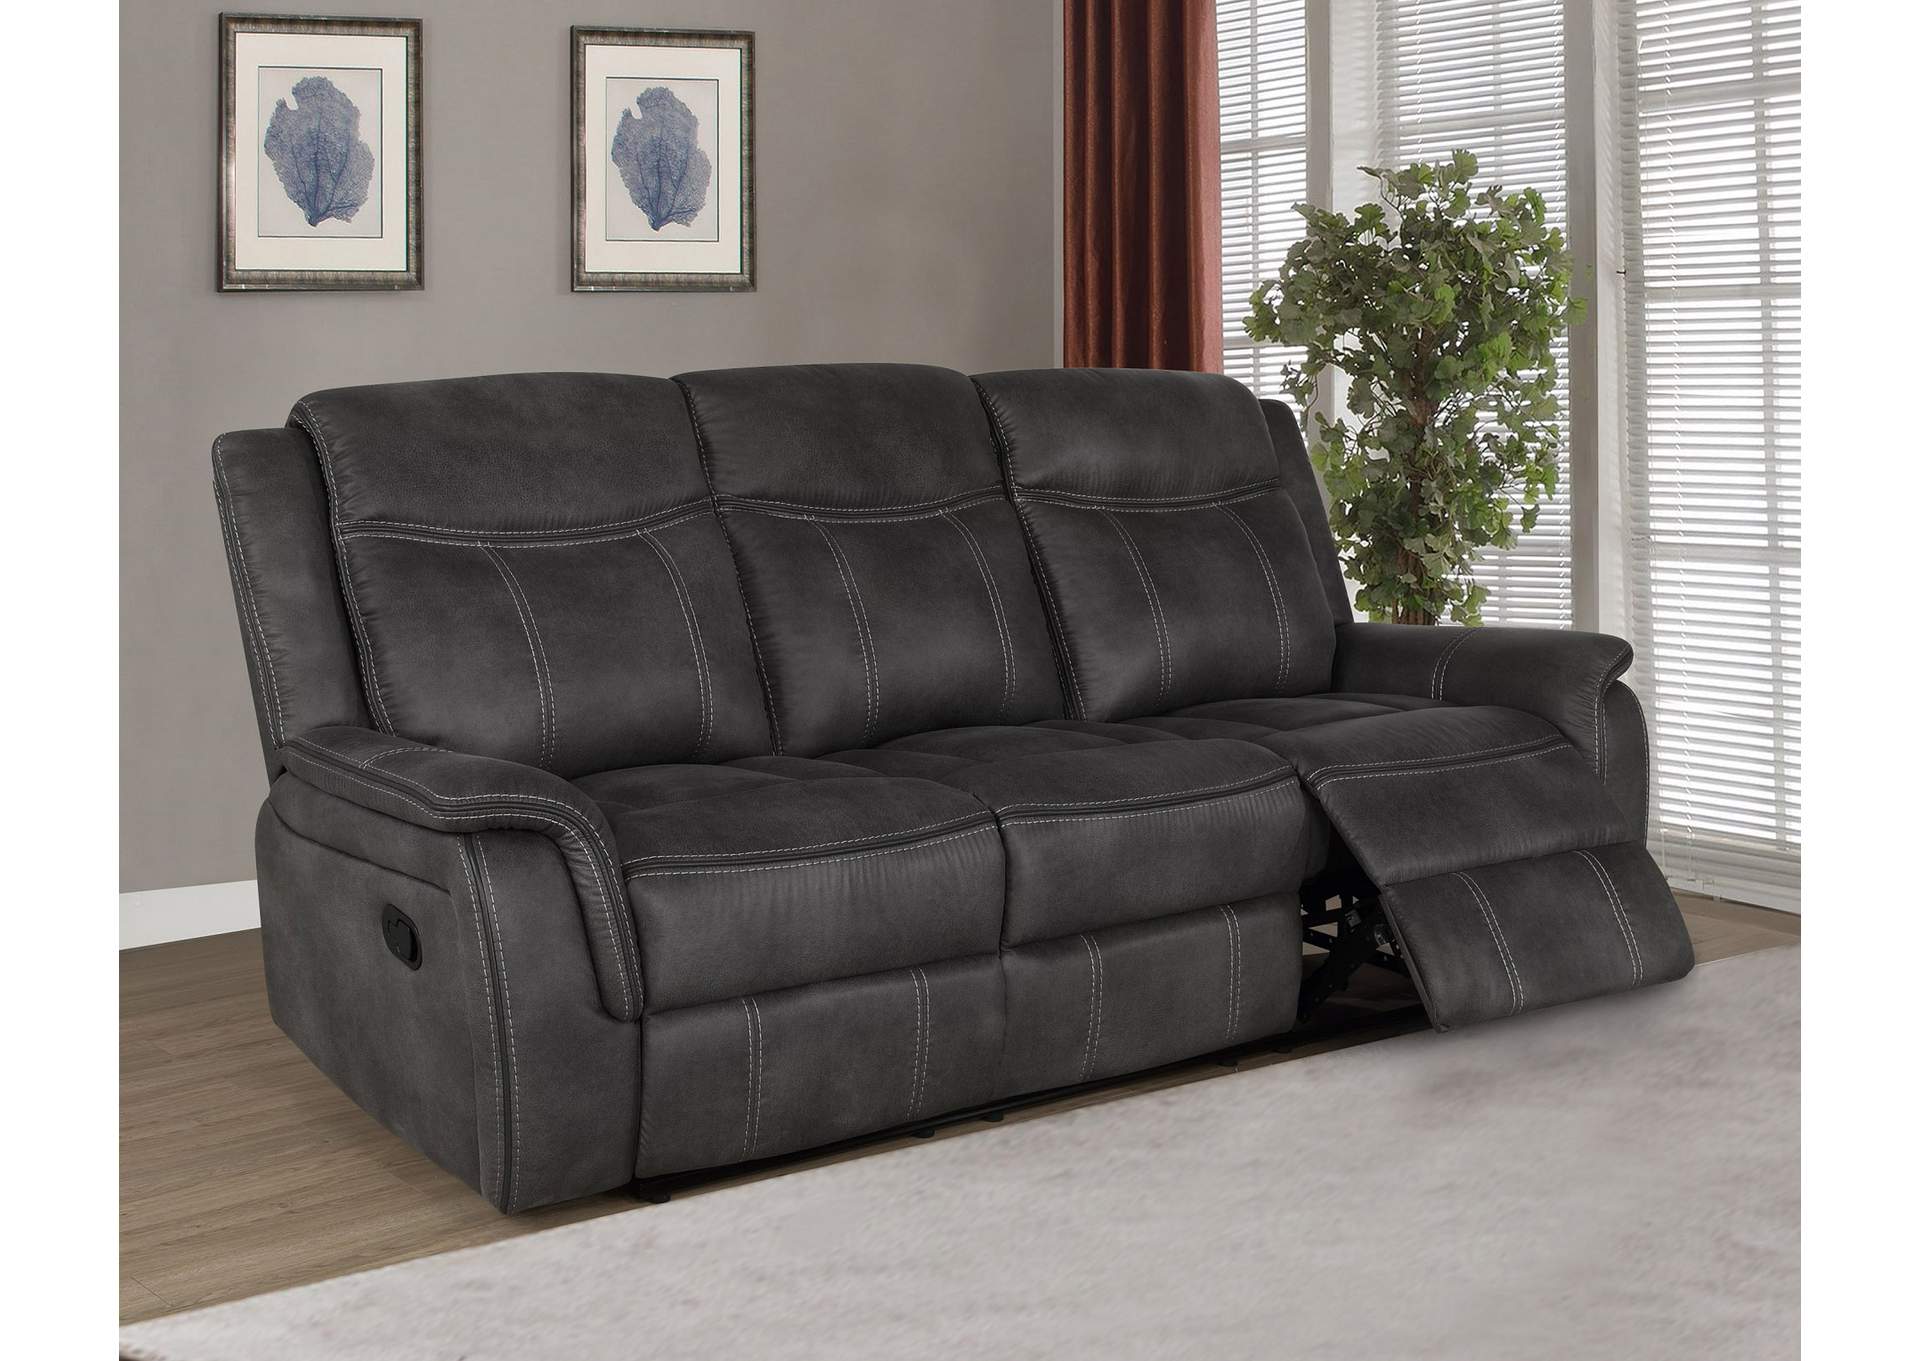 Lawrence Upholstered Tufted Back Motion Sofa,Coaster Furniture